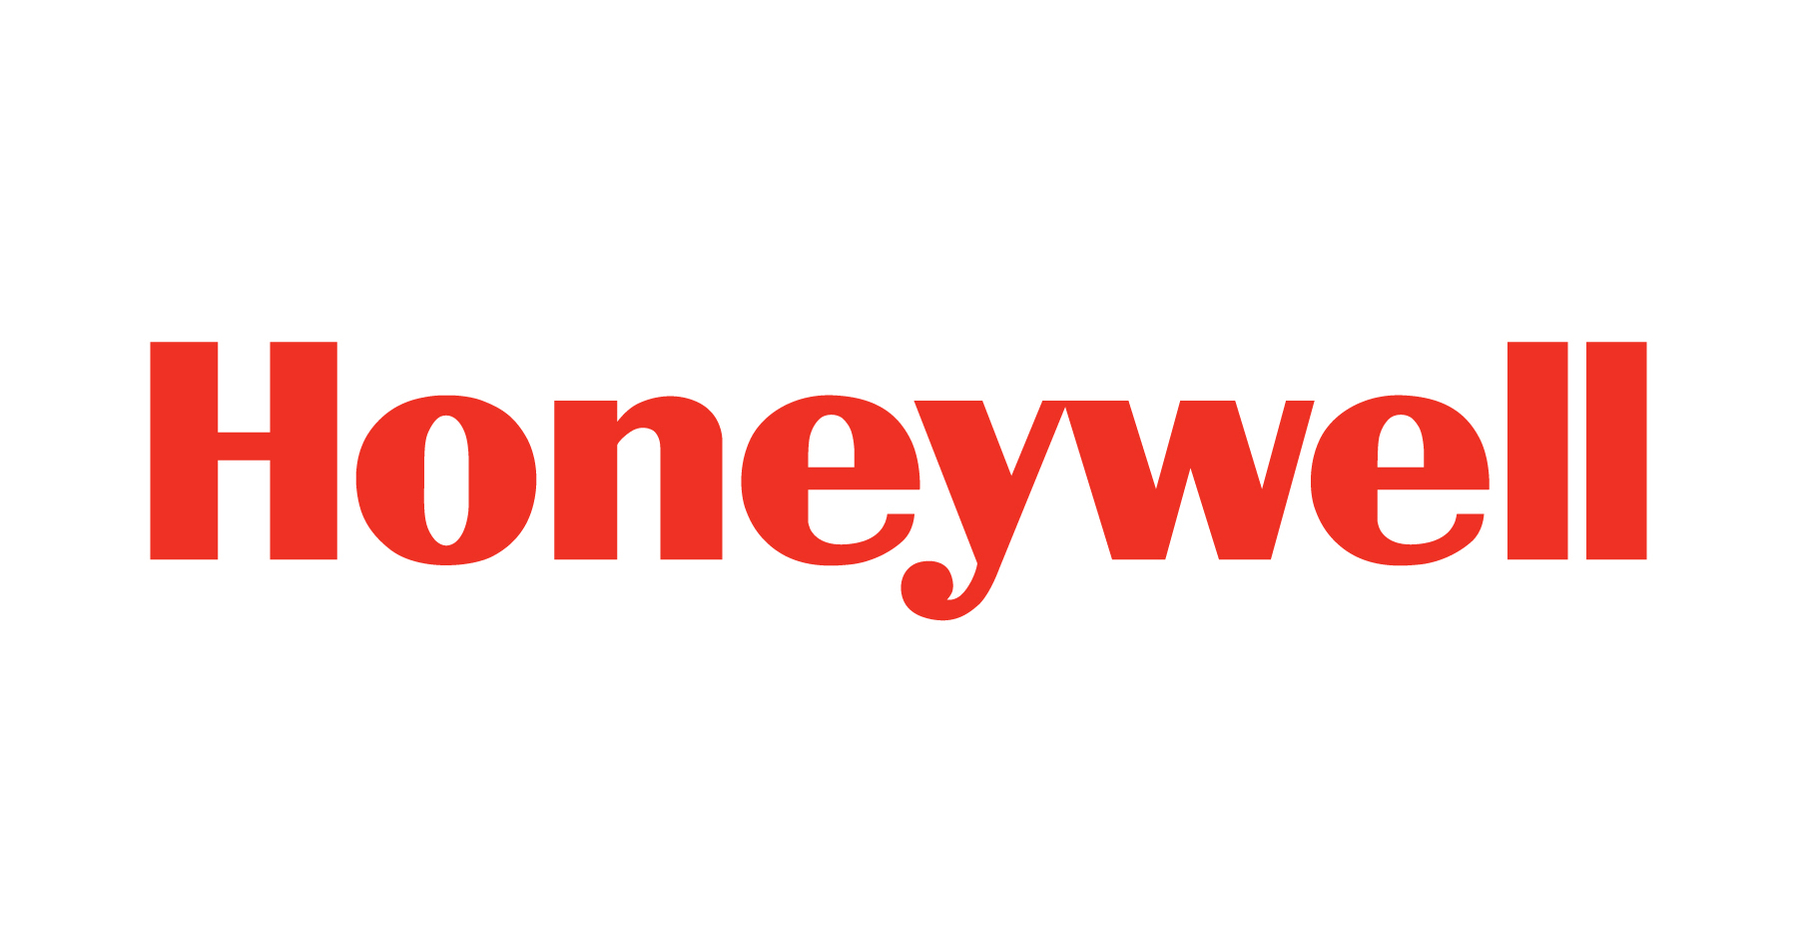 honeywell_logo.jpg